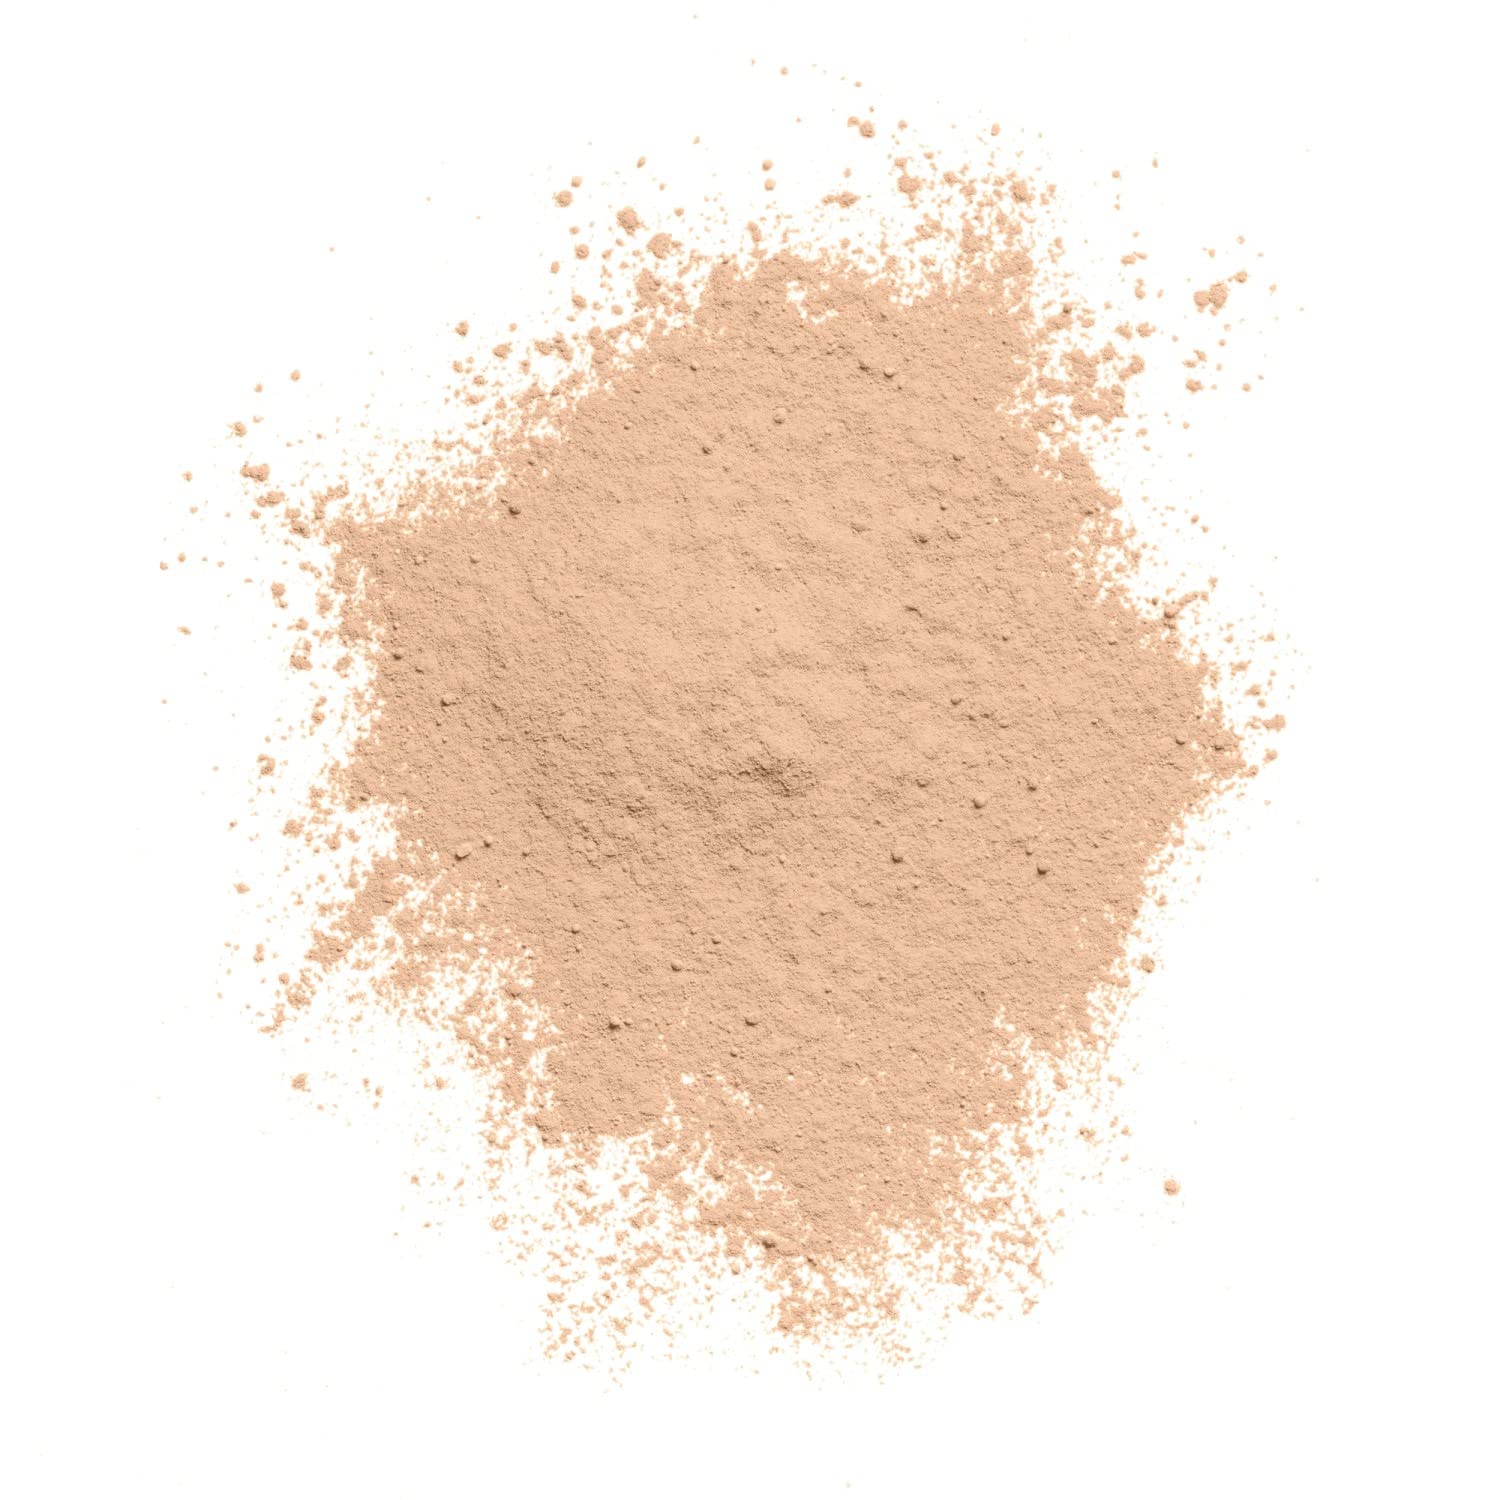 COVERGIRL Clean Invisible Loose Powder - Loose Powder, Setting Powder, Vegan Formula - Translucent Light, 20g (0.7 oz)